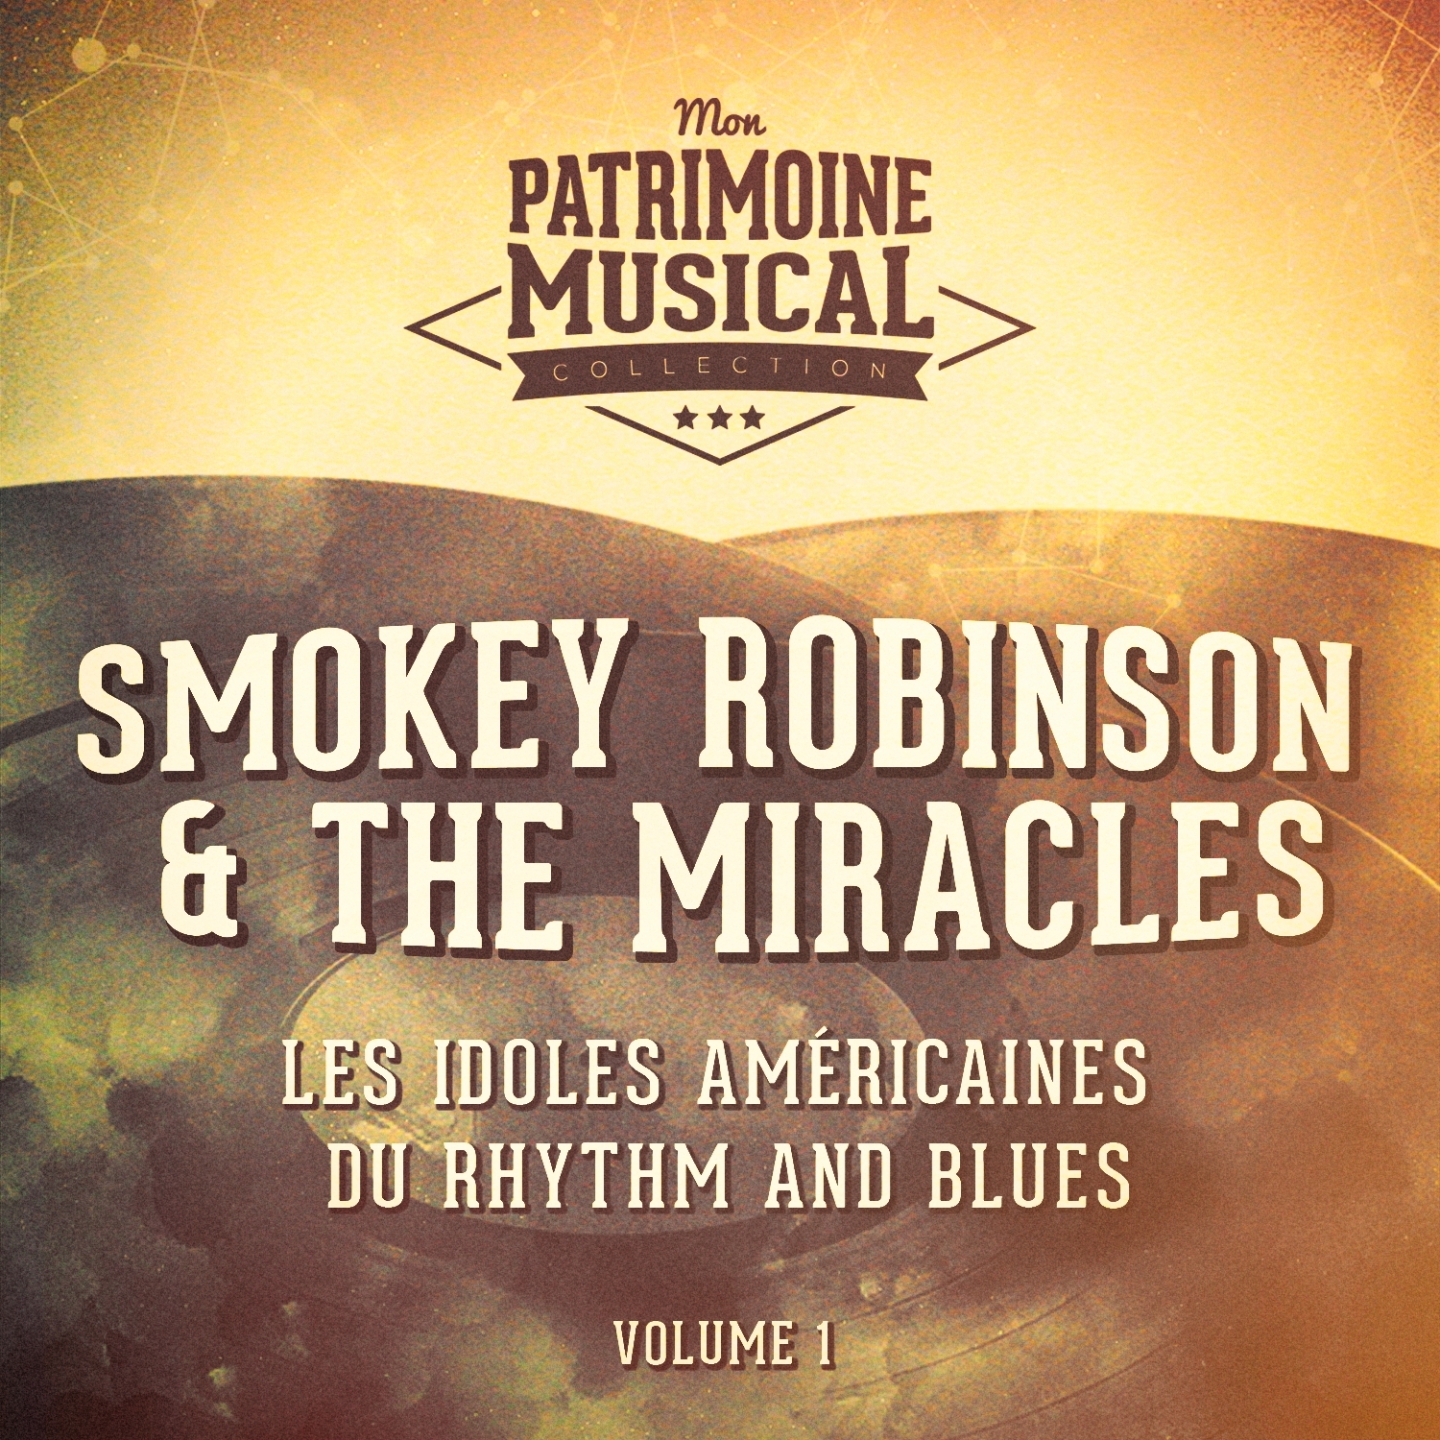 Les Idoles Ame ricaines Du Rhythm and Blues: Smokey Robinson  the Miracles, Vol. 1